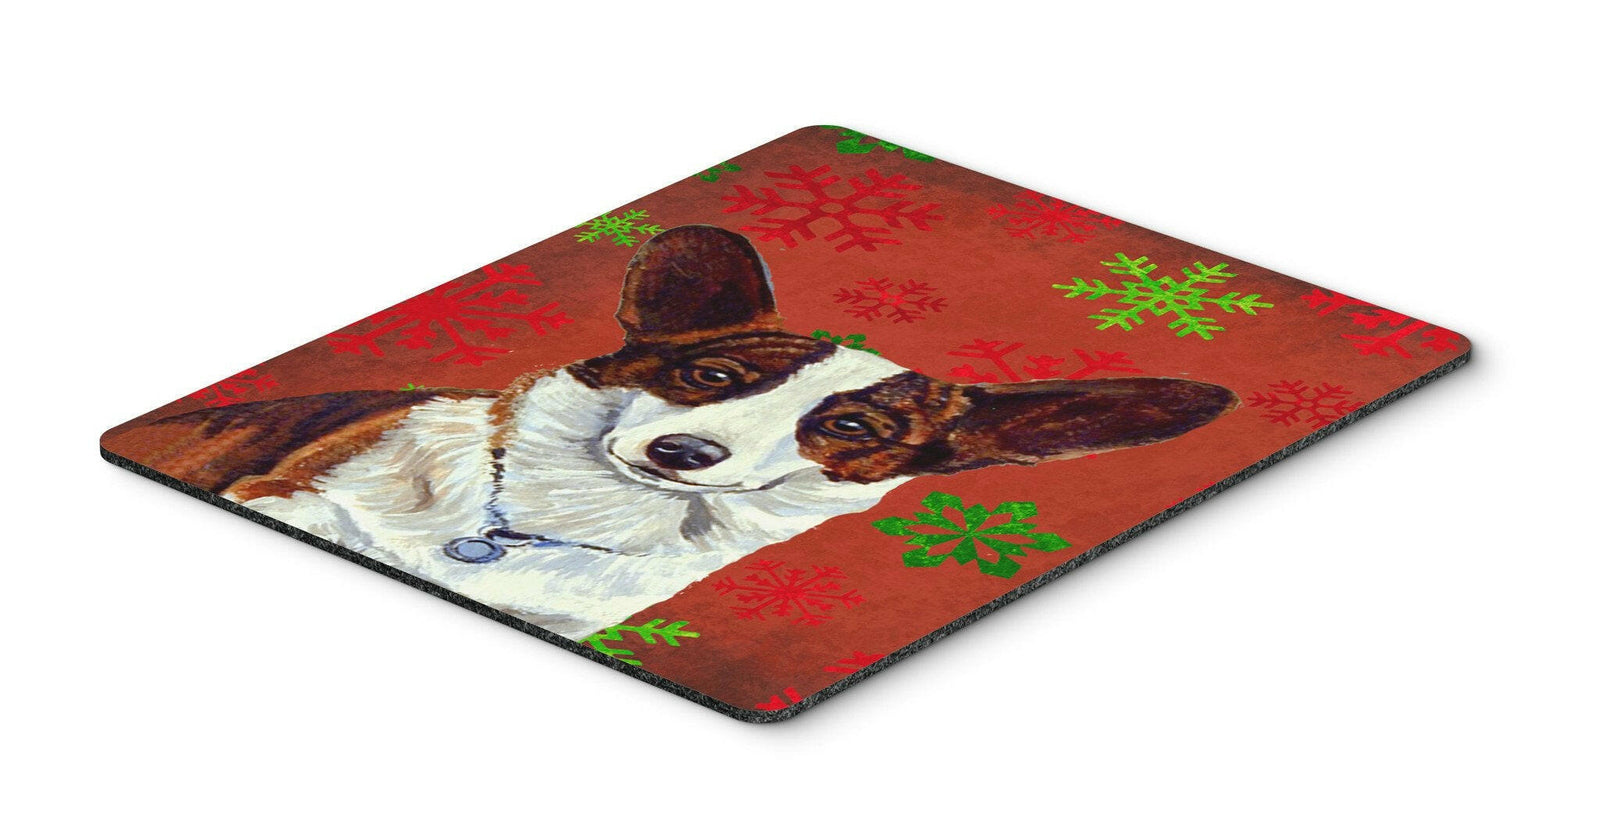 Corgi Red and Green Snowflakes Holiday Christmas Mouse Pad, Hot Pad or Trivet by Caroline's Treasures